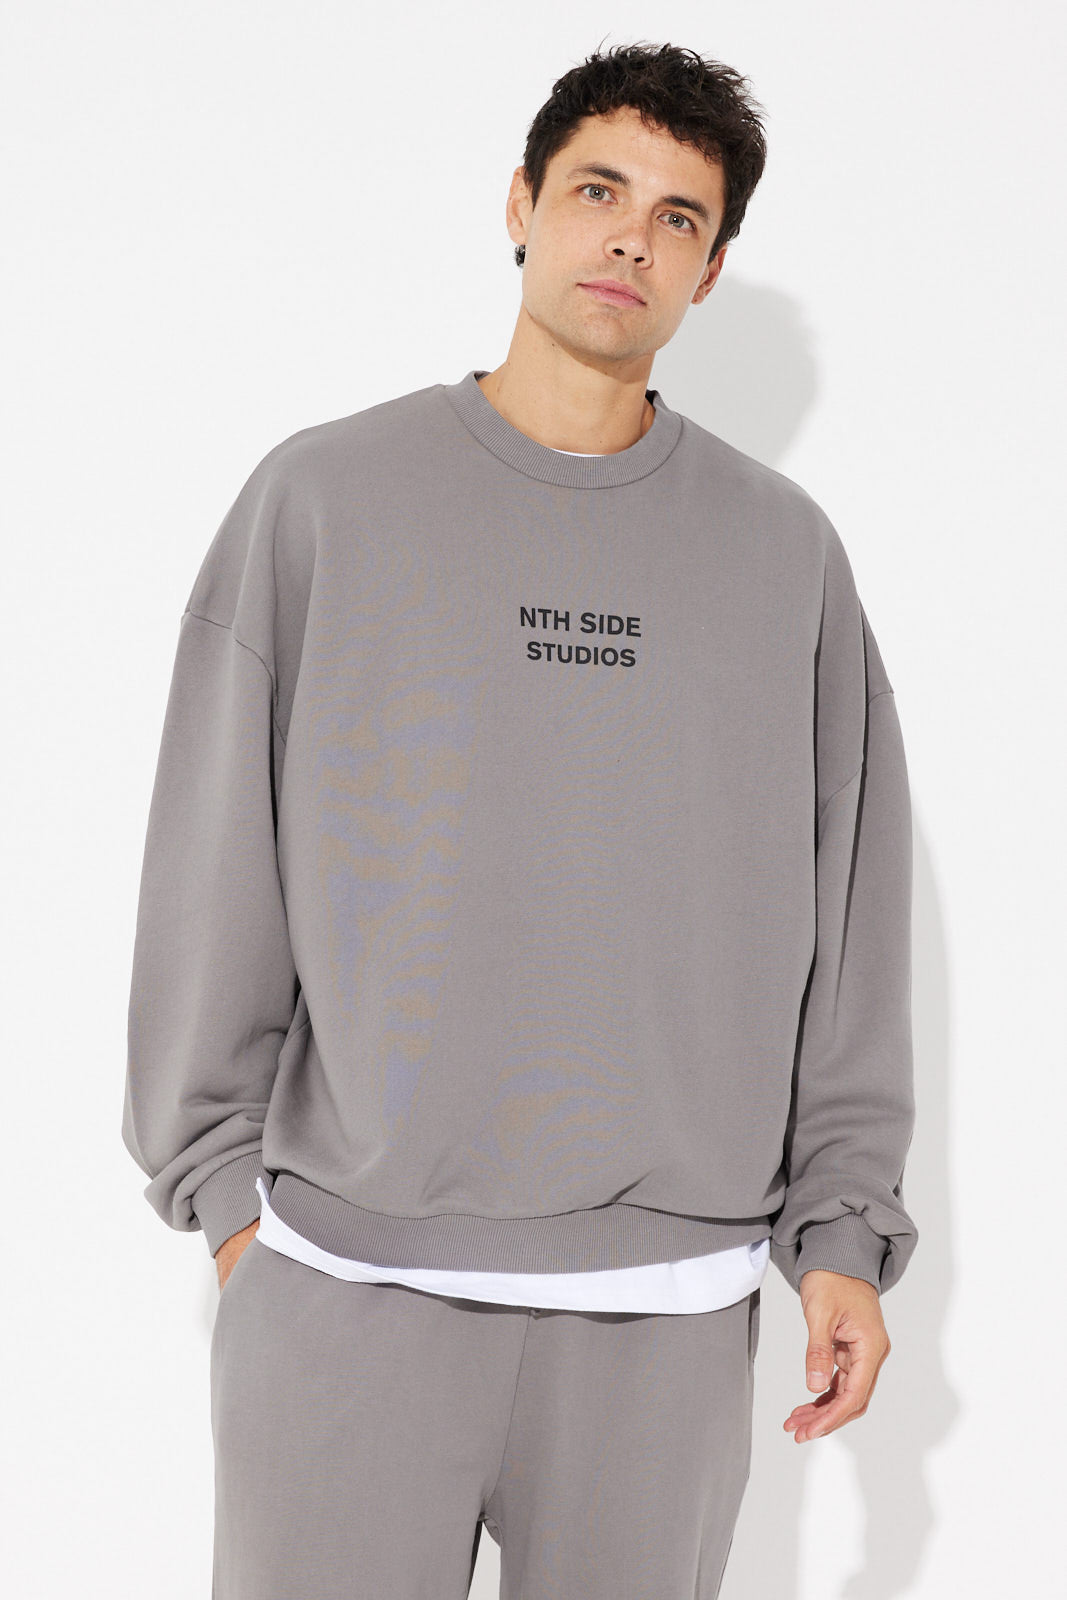 NTH Box Sweater Charcoal - SALE